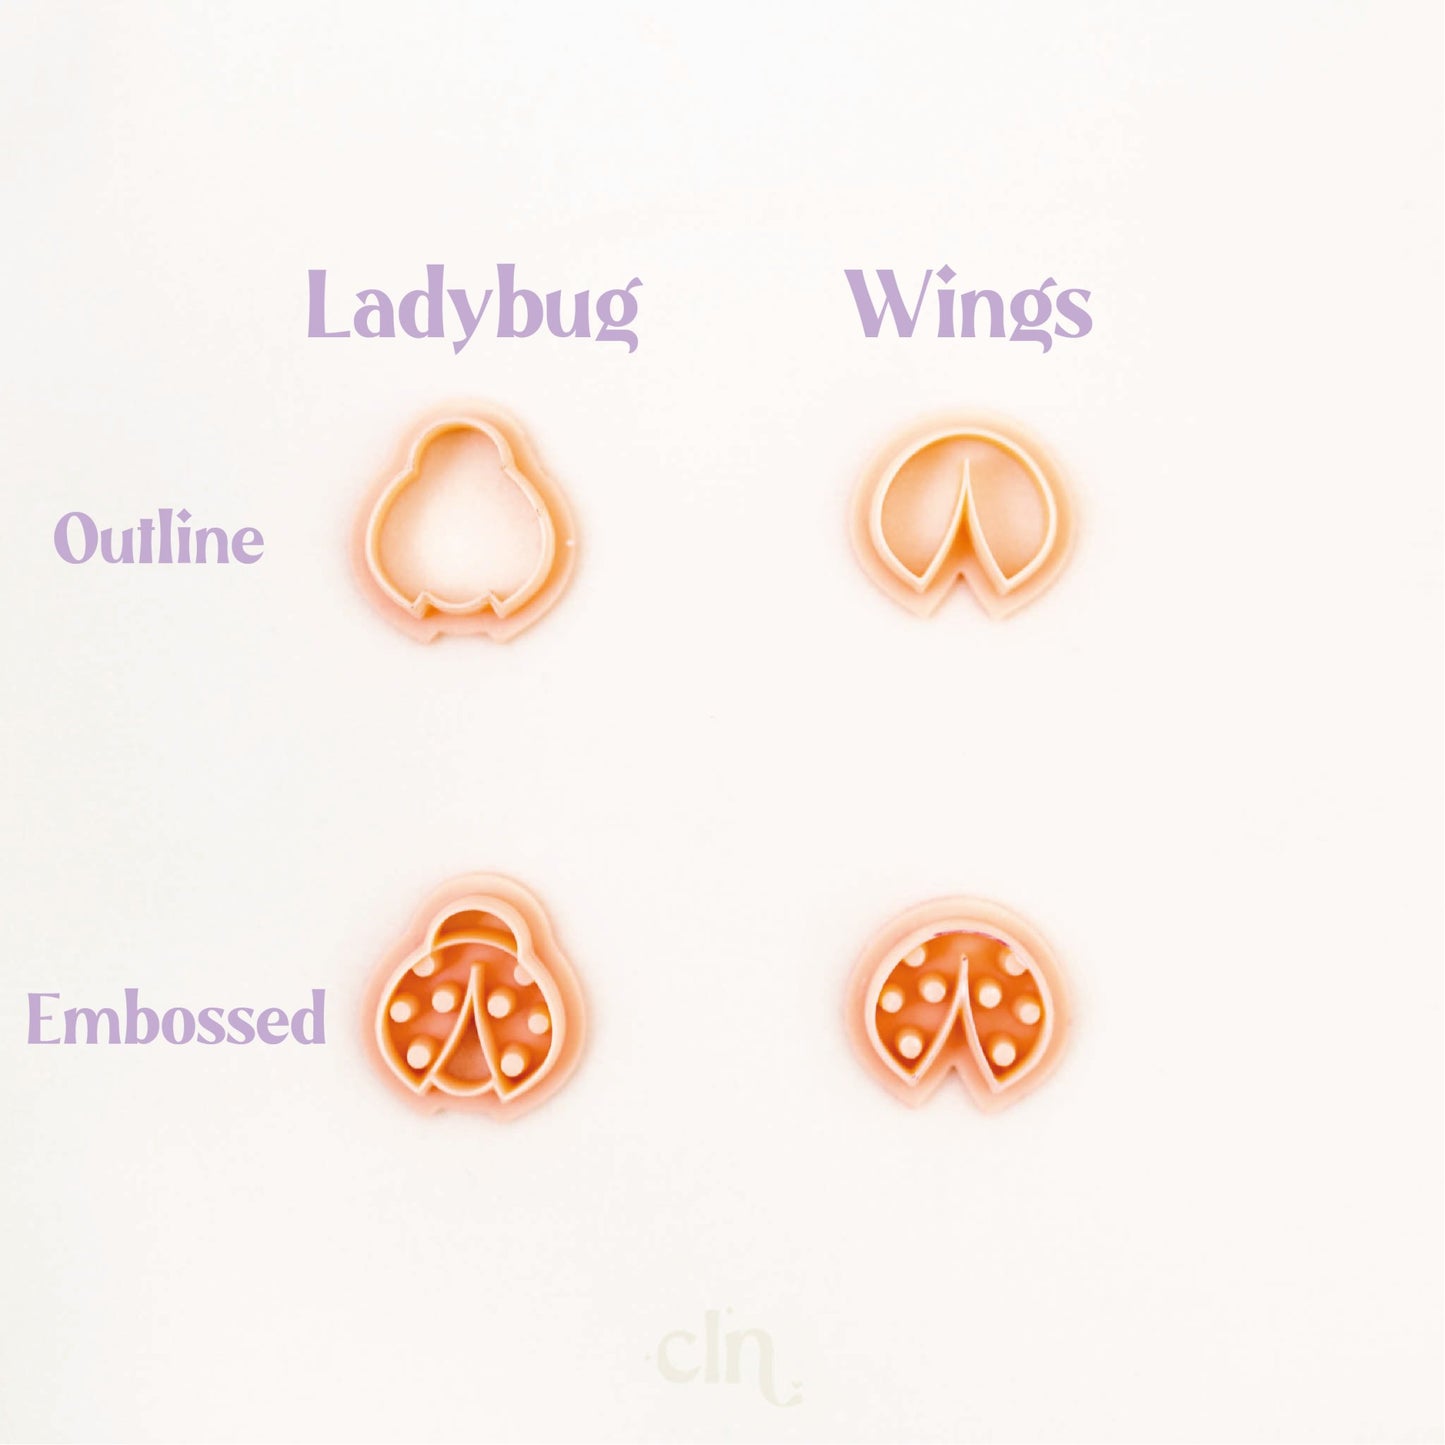 Ladybug - Cutter - CLN Atelier